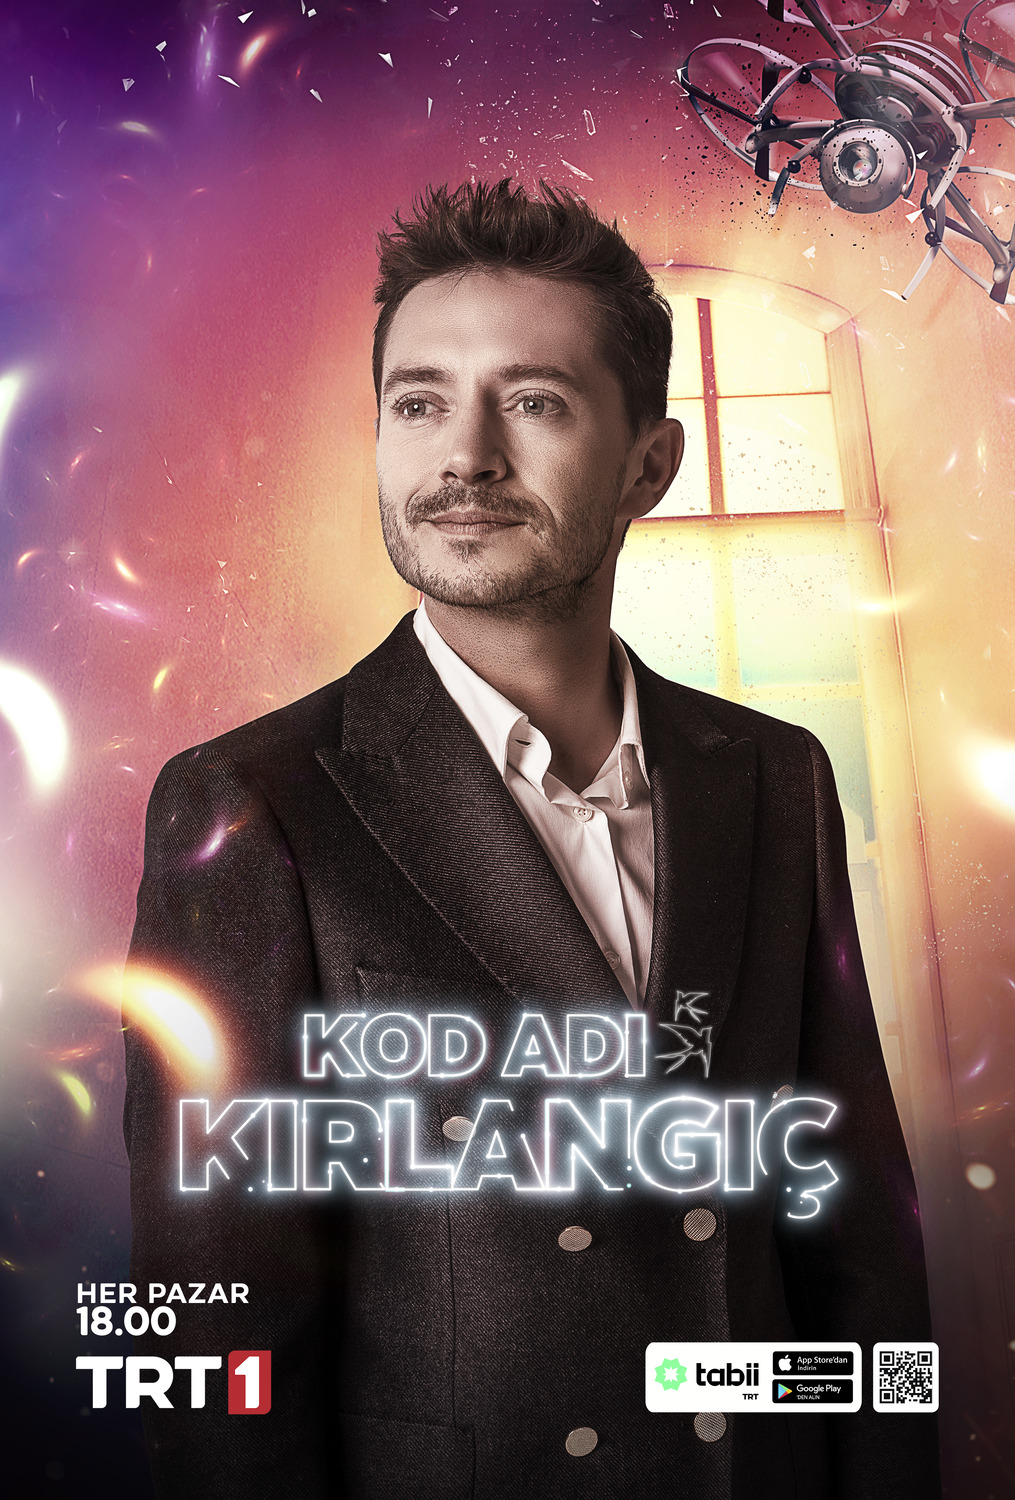 Extra Large TV Poster Image for Kod Adı Kırlangıç (#9 of 12)